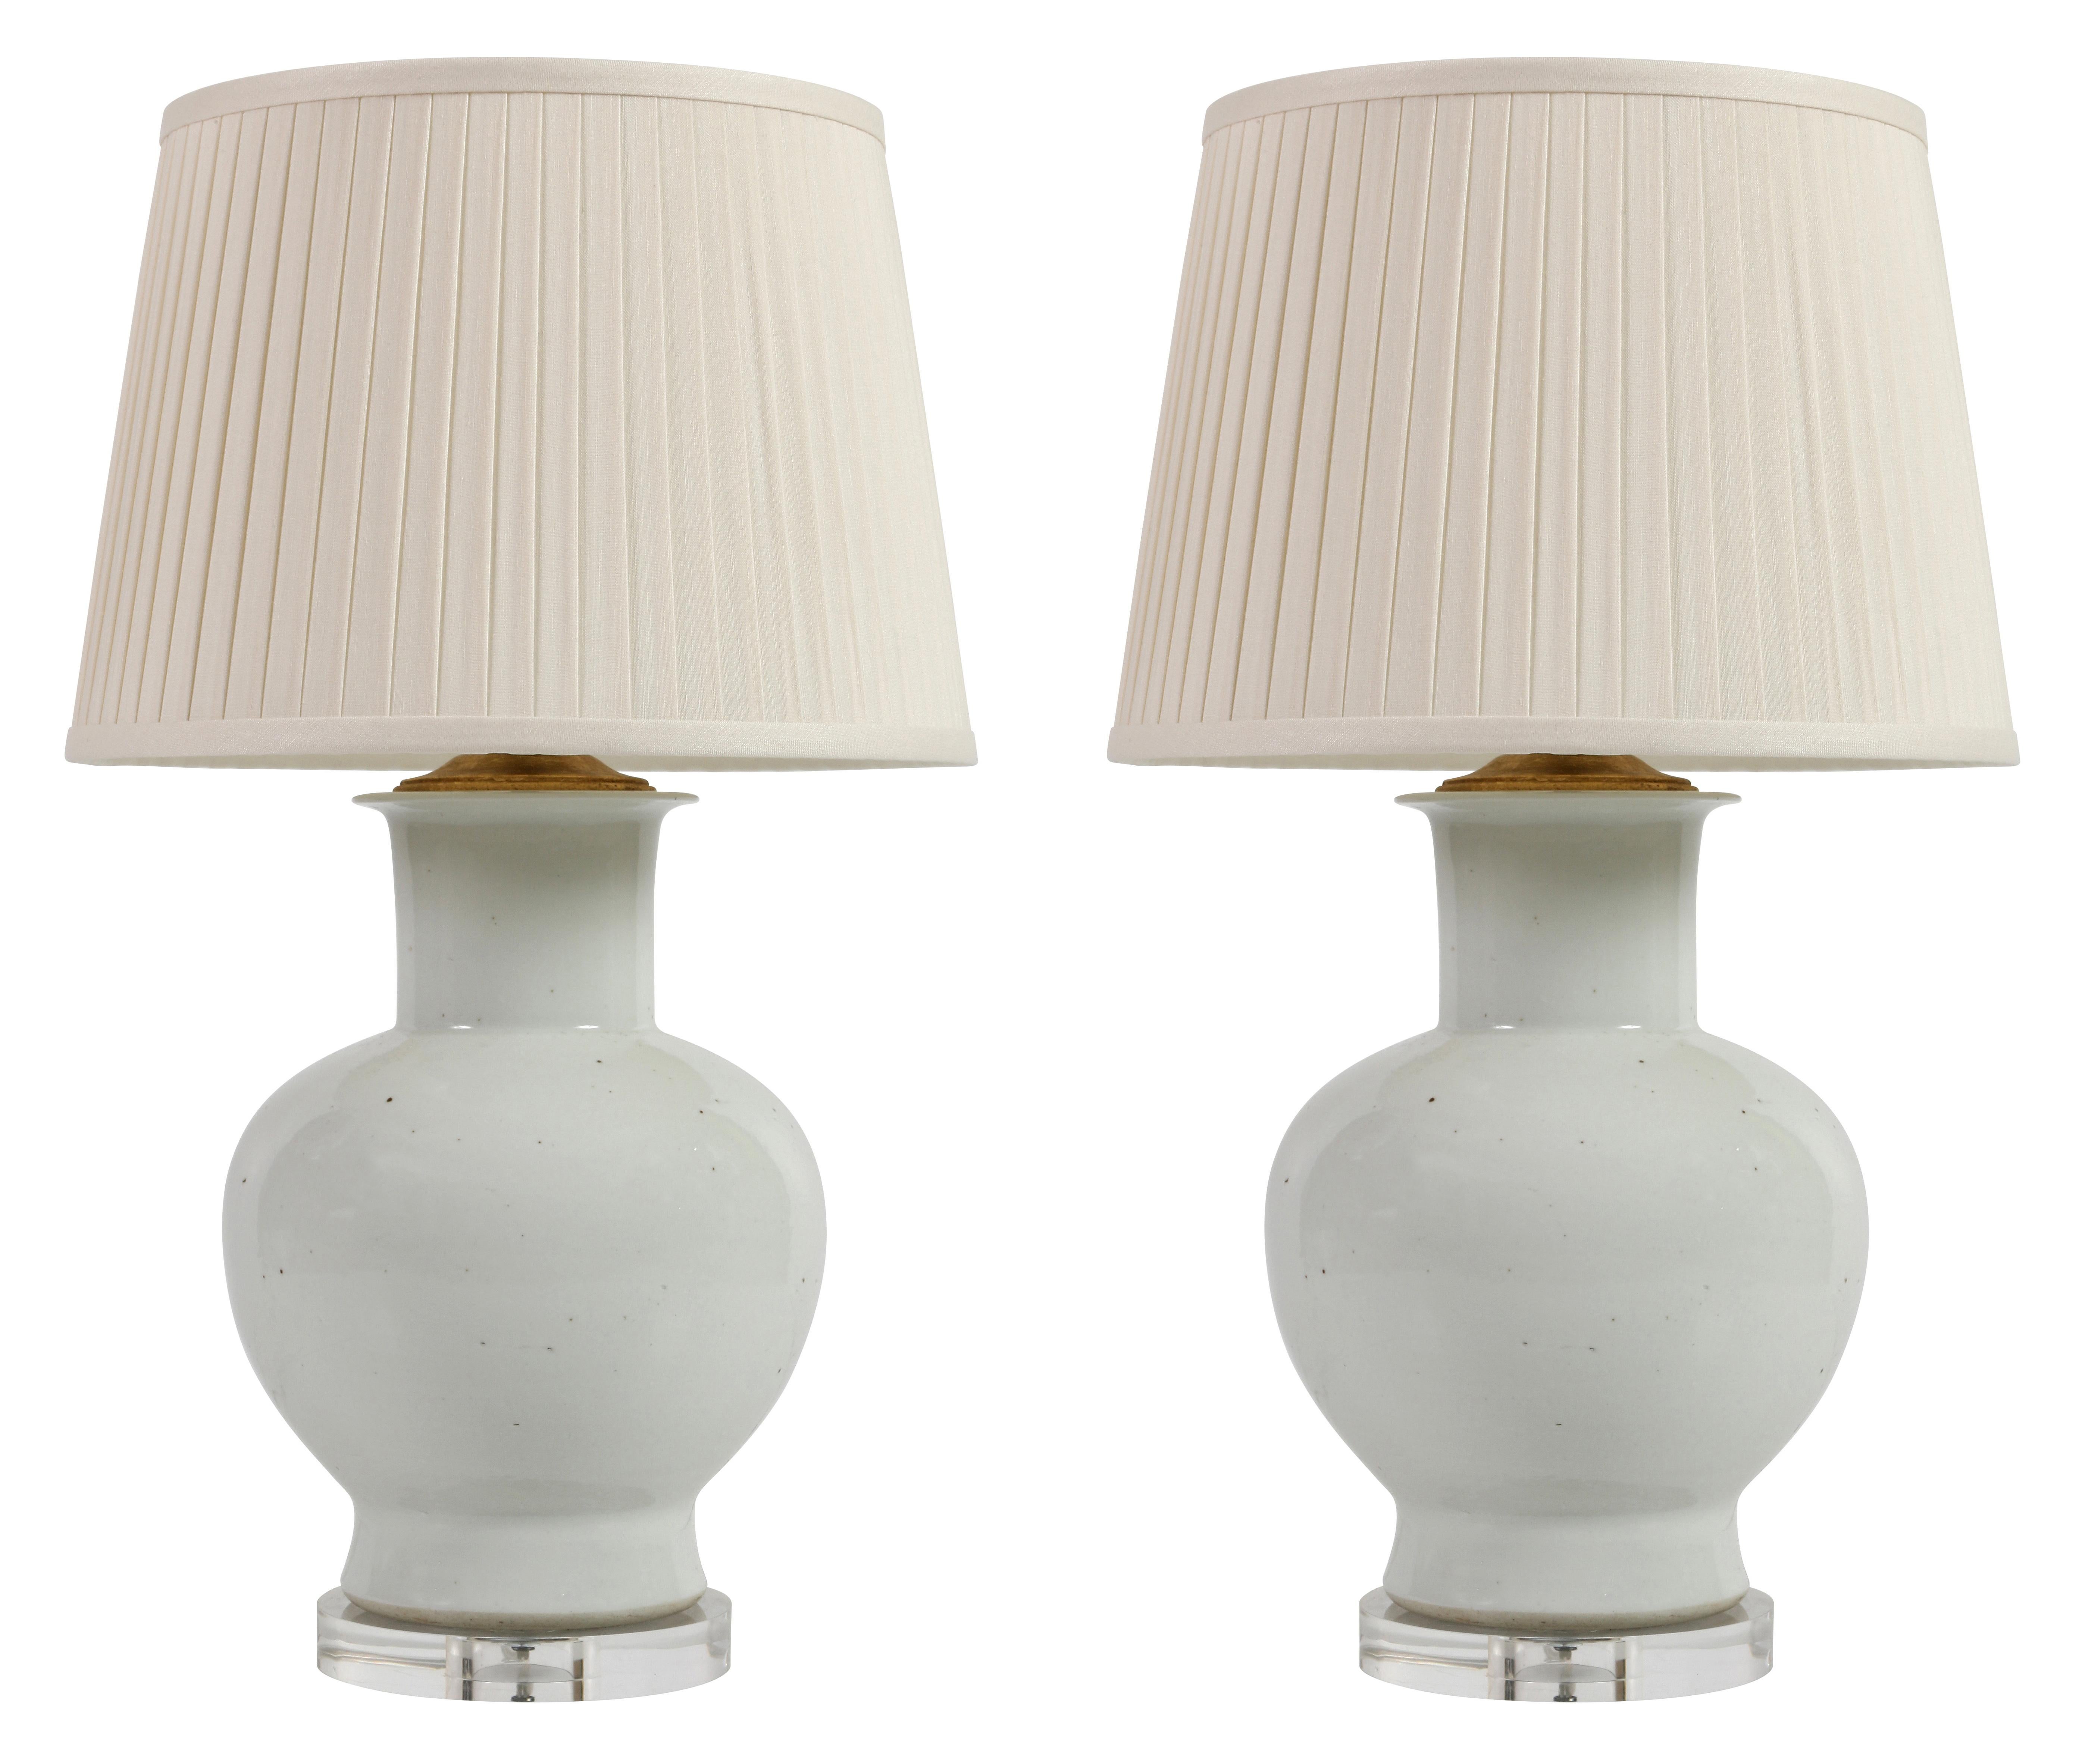 Chinese Pair of White Ceramic Lamps